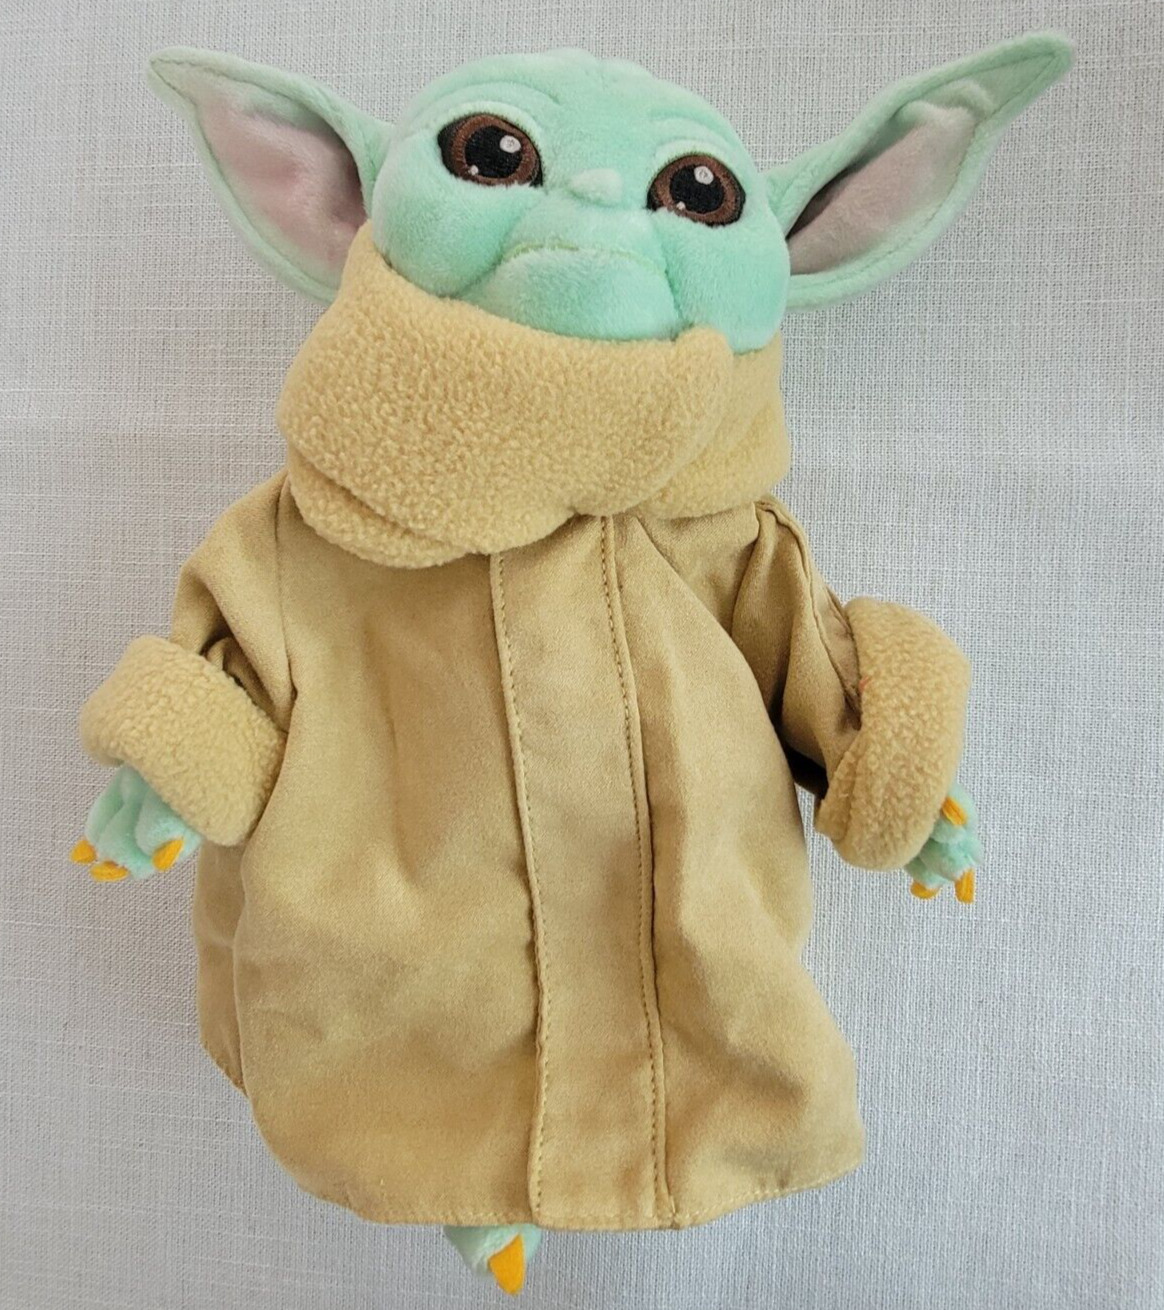 GROGU Plush Doll The Mandalorian The Child Baby Yoda STAR WARS Official Disney